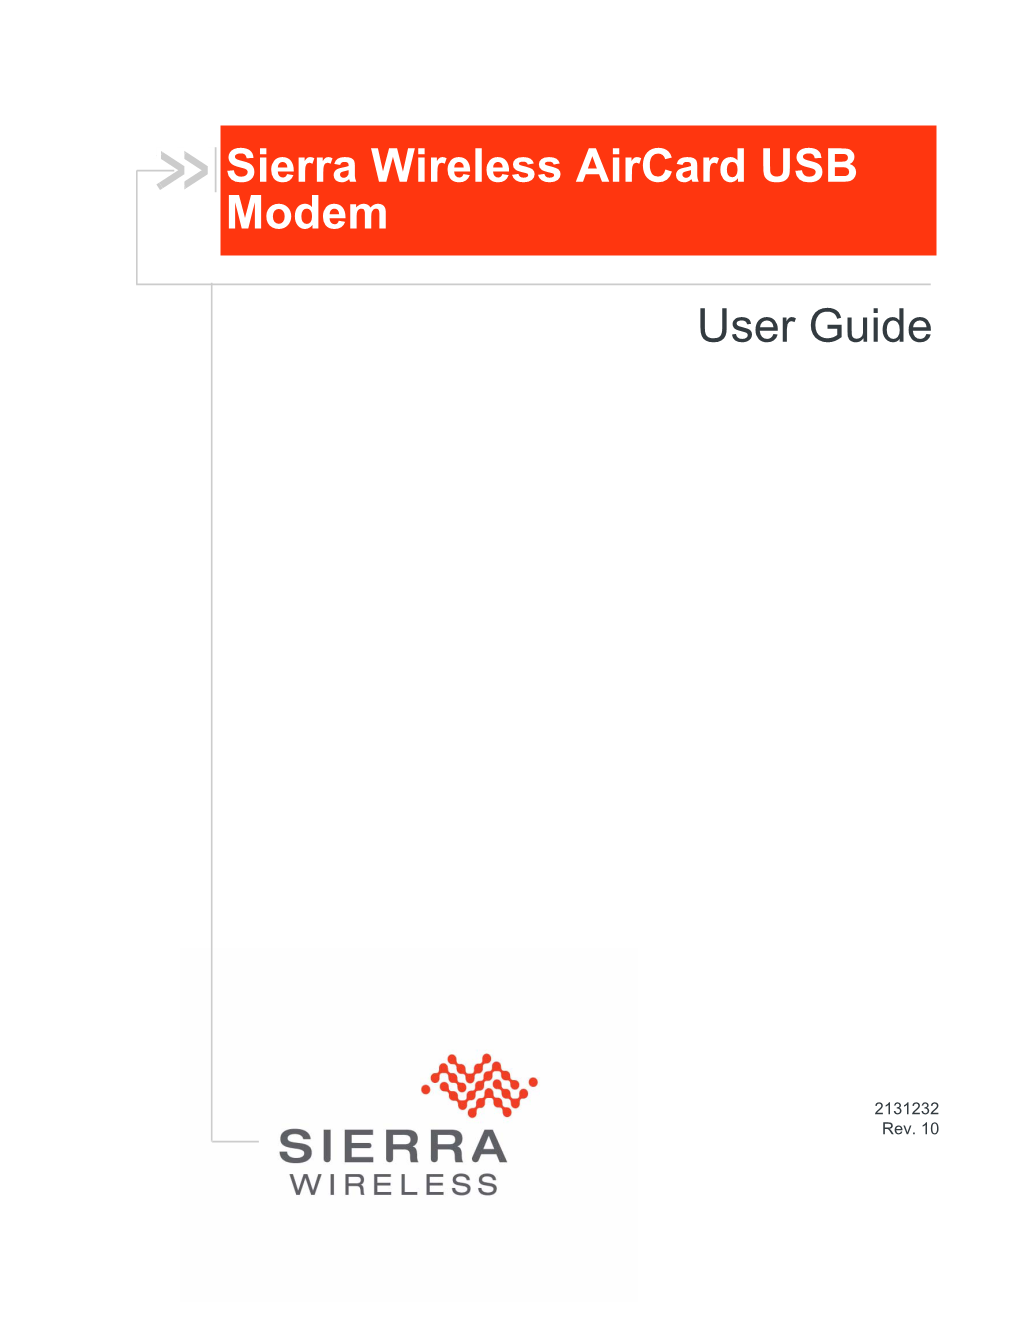 Aircard USB Modem User Guide